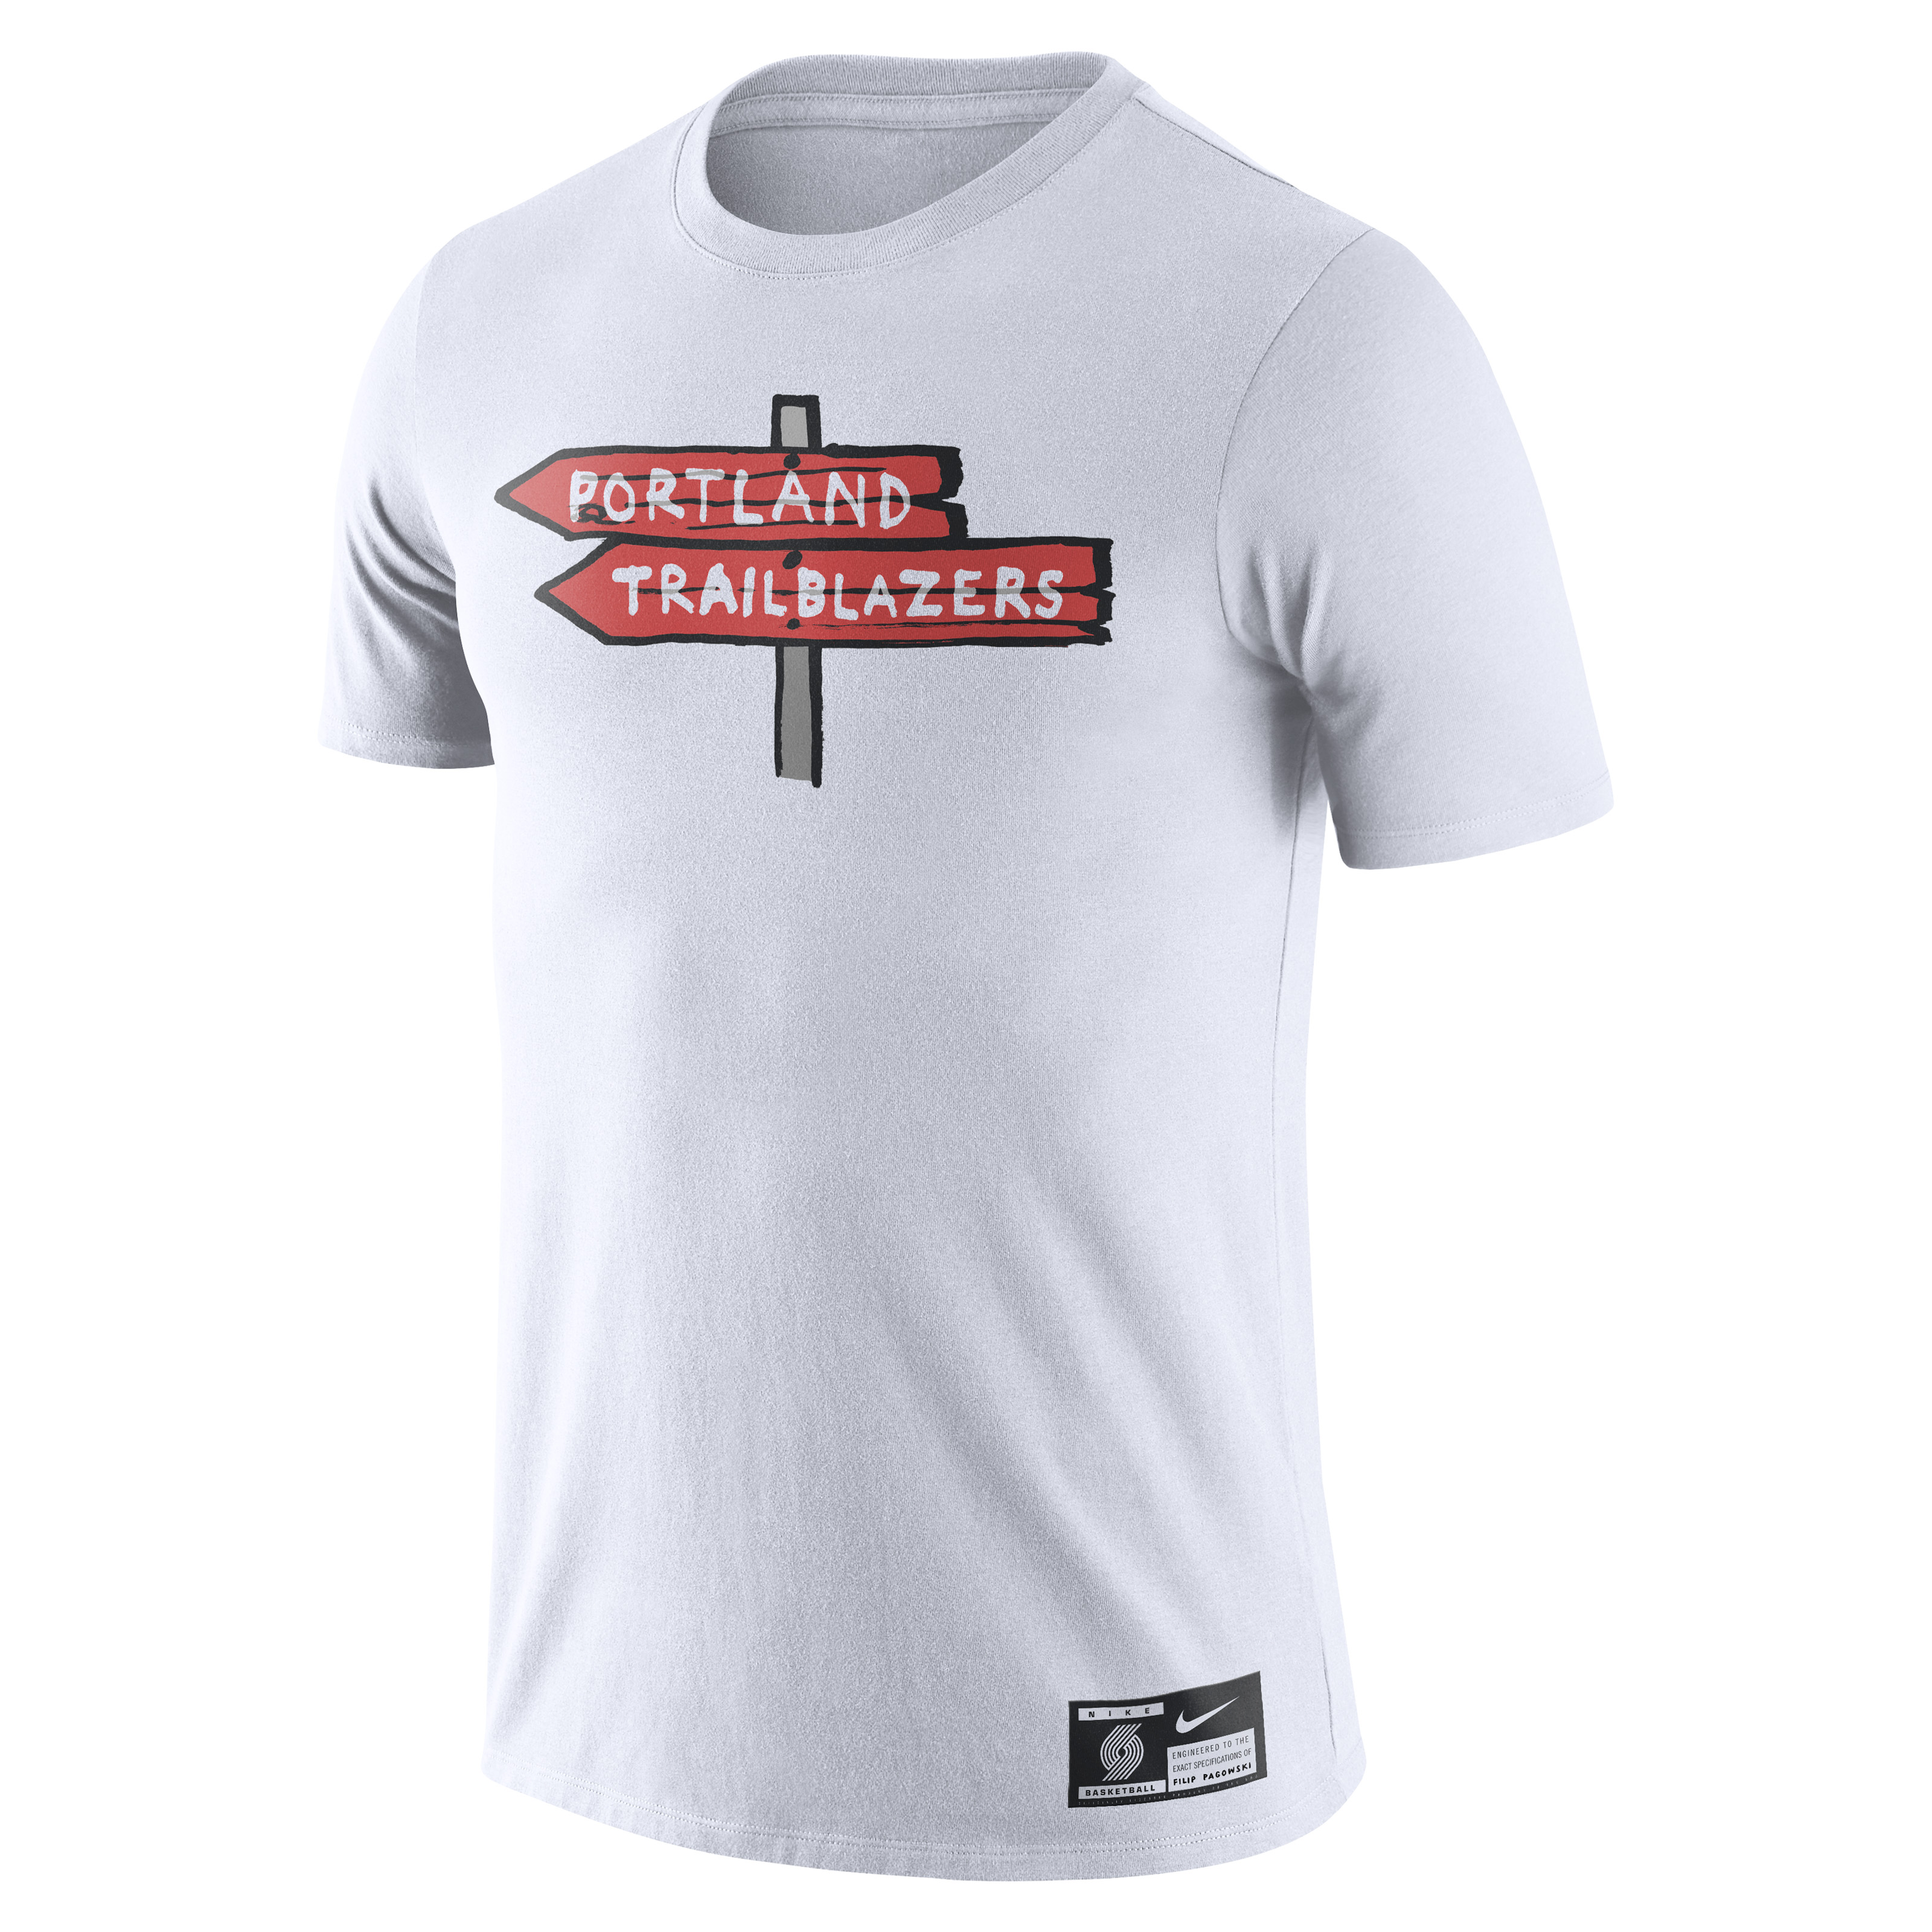 Filip Pagowski Nike T shirt &#x27;Portland Trailblazers&#x27;